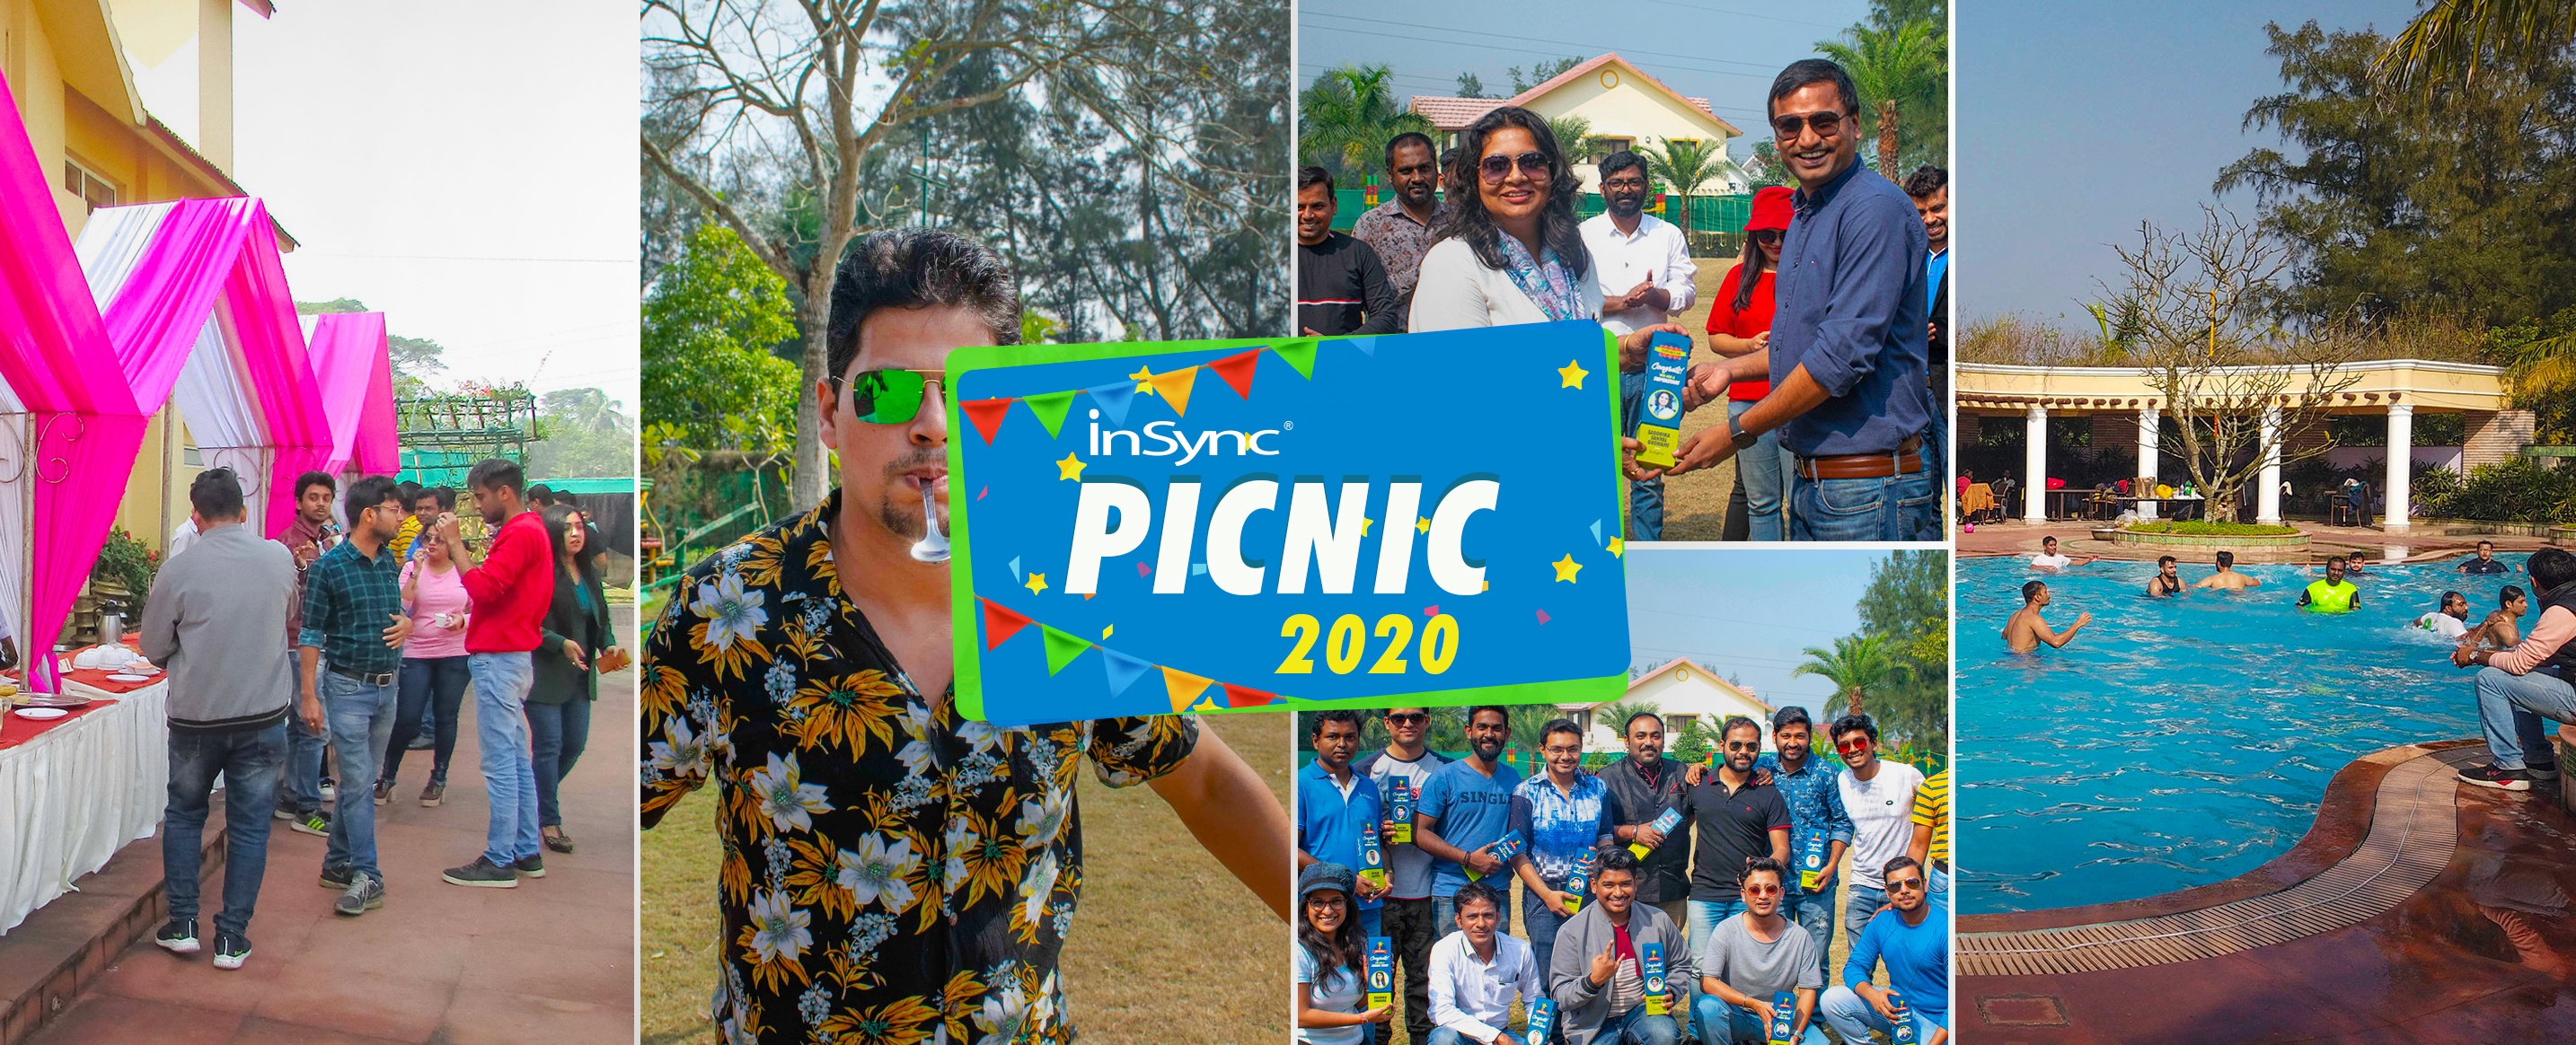 picnic-2020